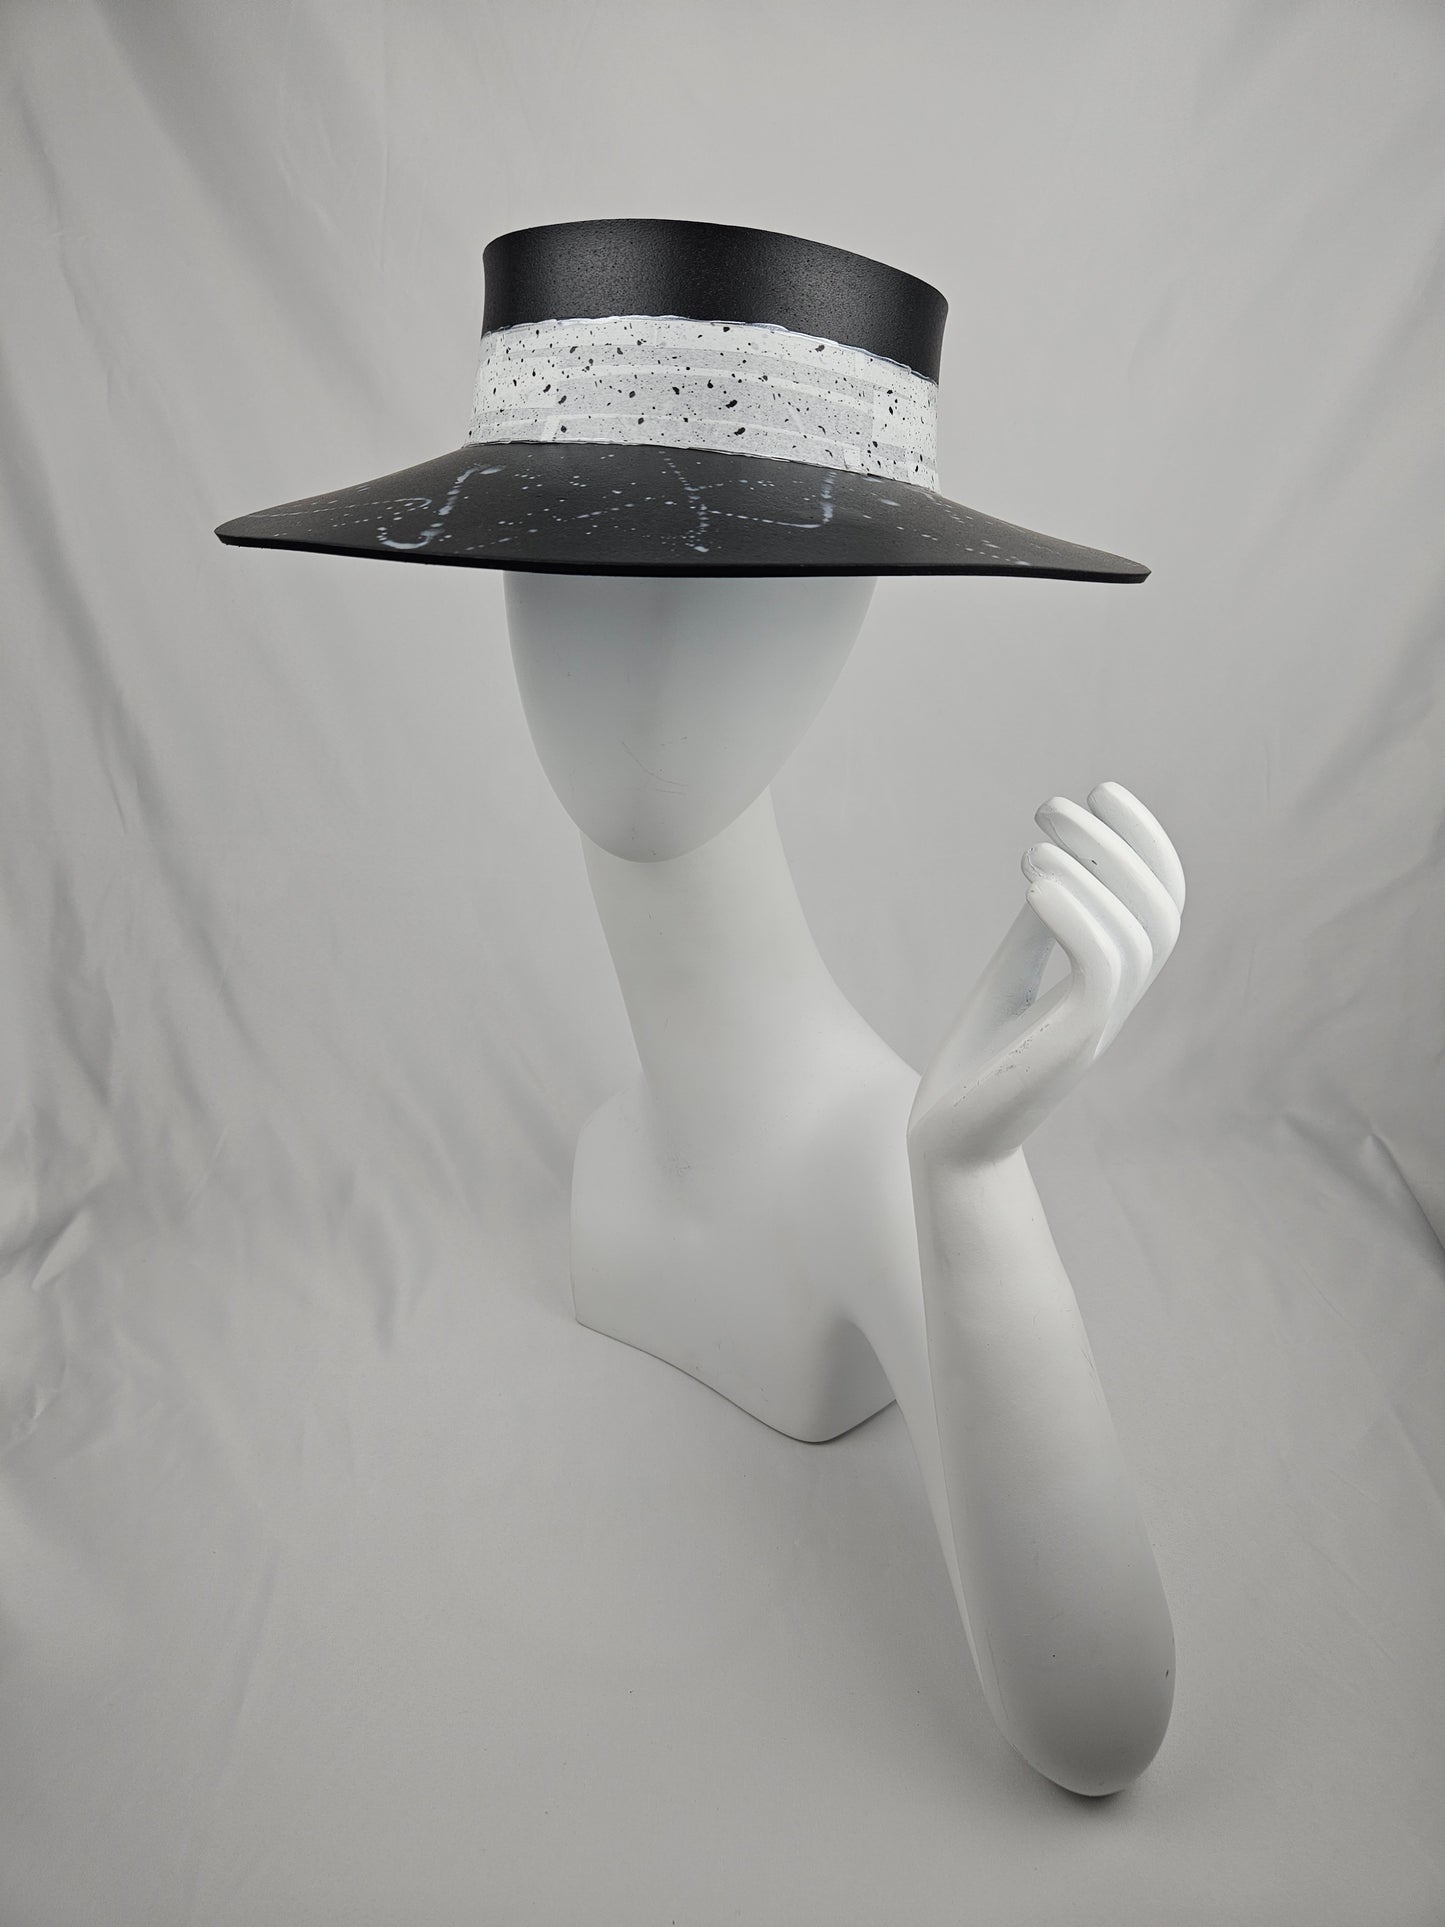 Tall Timeless Black Audrey Foam Sun Visor Hat with Elegant Spotted Band and Silver Paint Splatter: 1950s, Walks, Brunch, Tea, Golf, Wedding, Church, No Headache, Easter, Pool